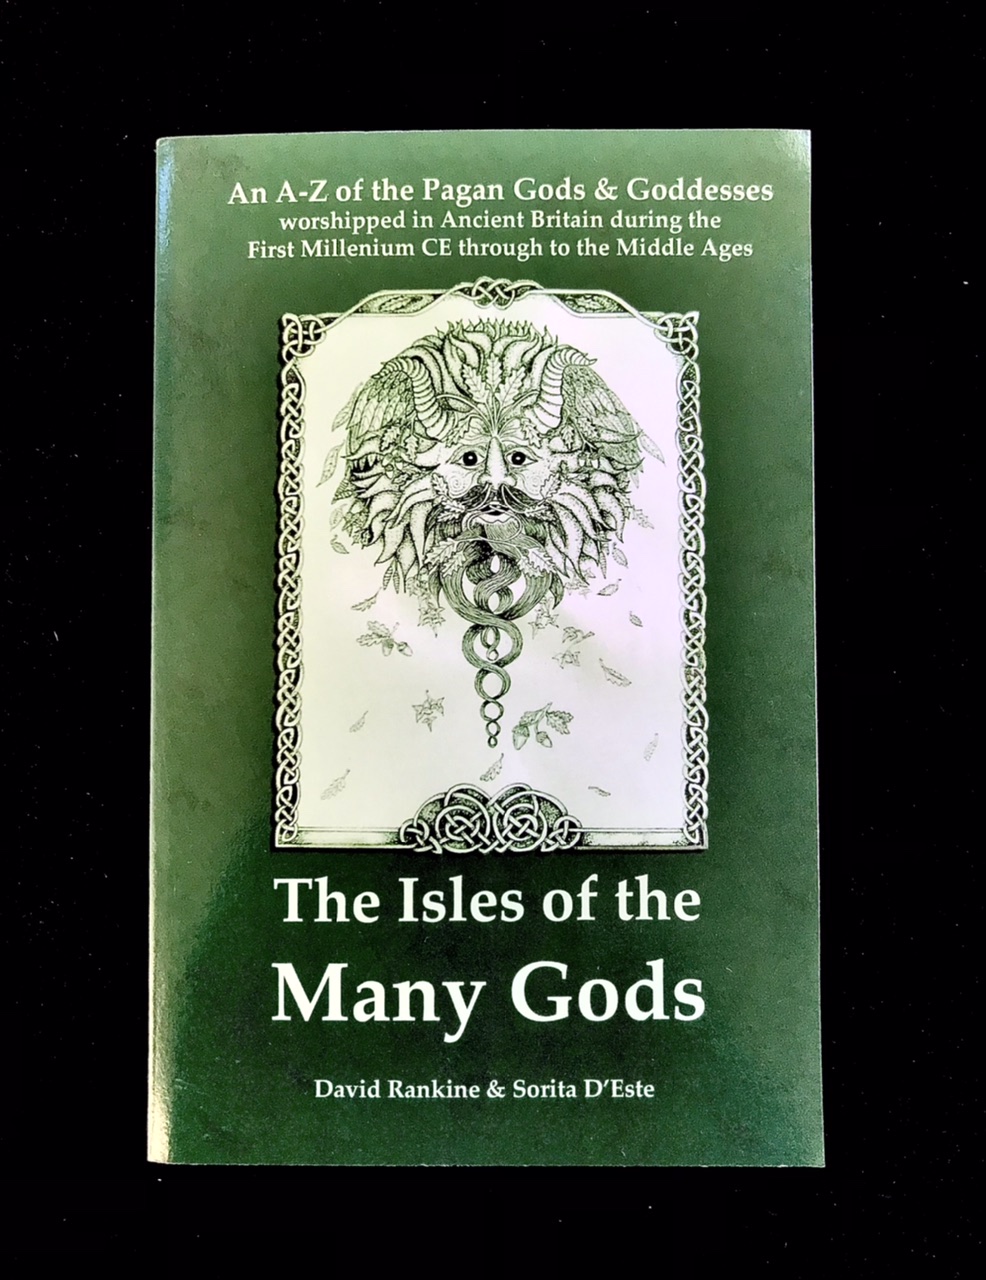 The Isle Of Many Gods by David Rankine & Sorita D'Este